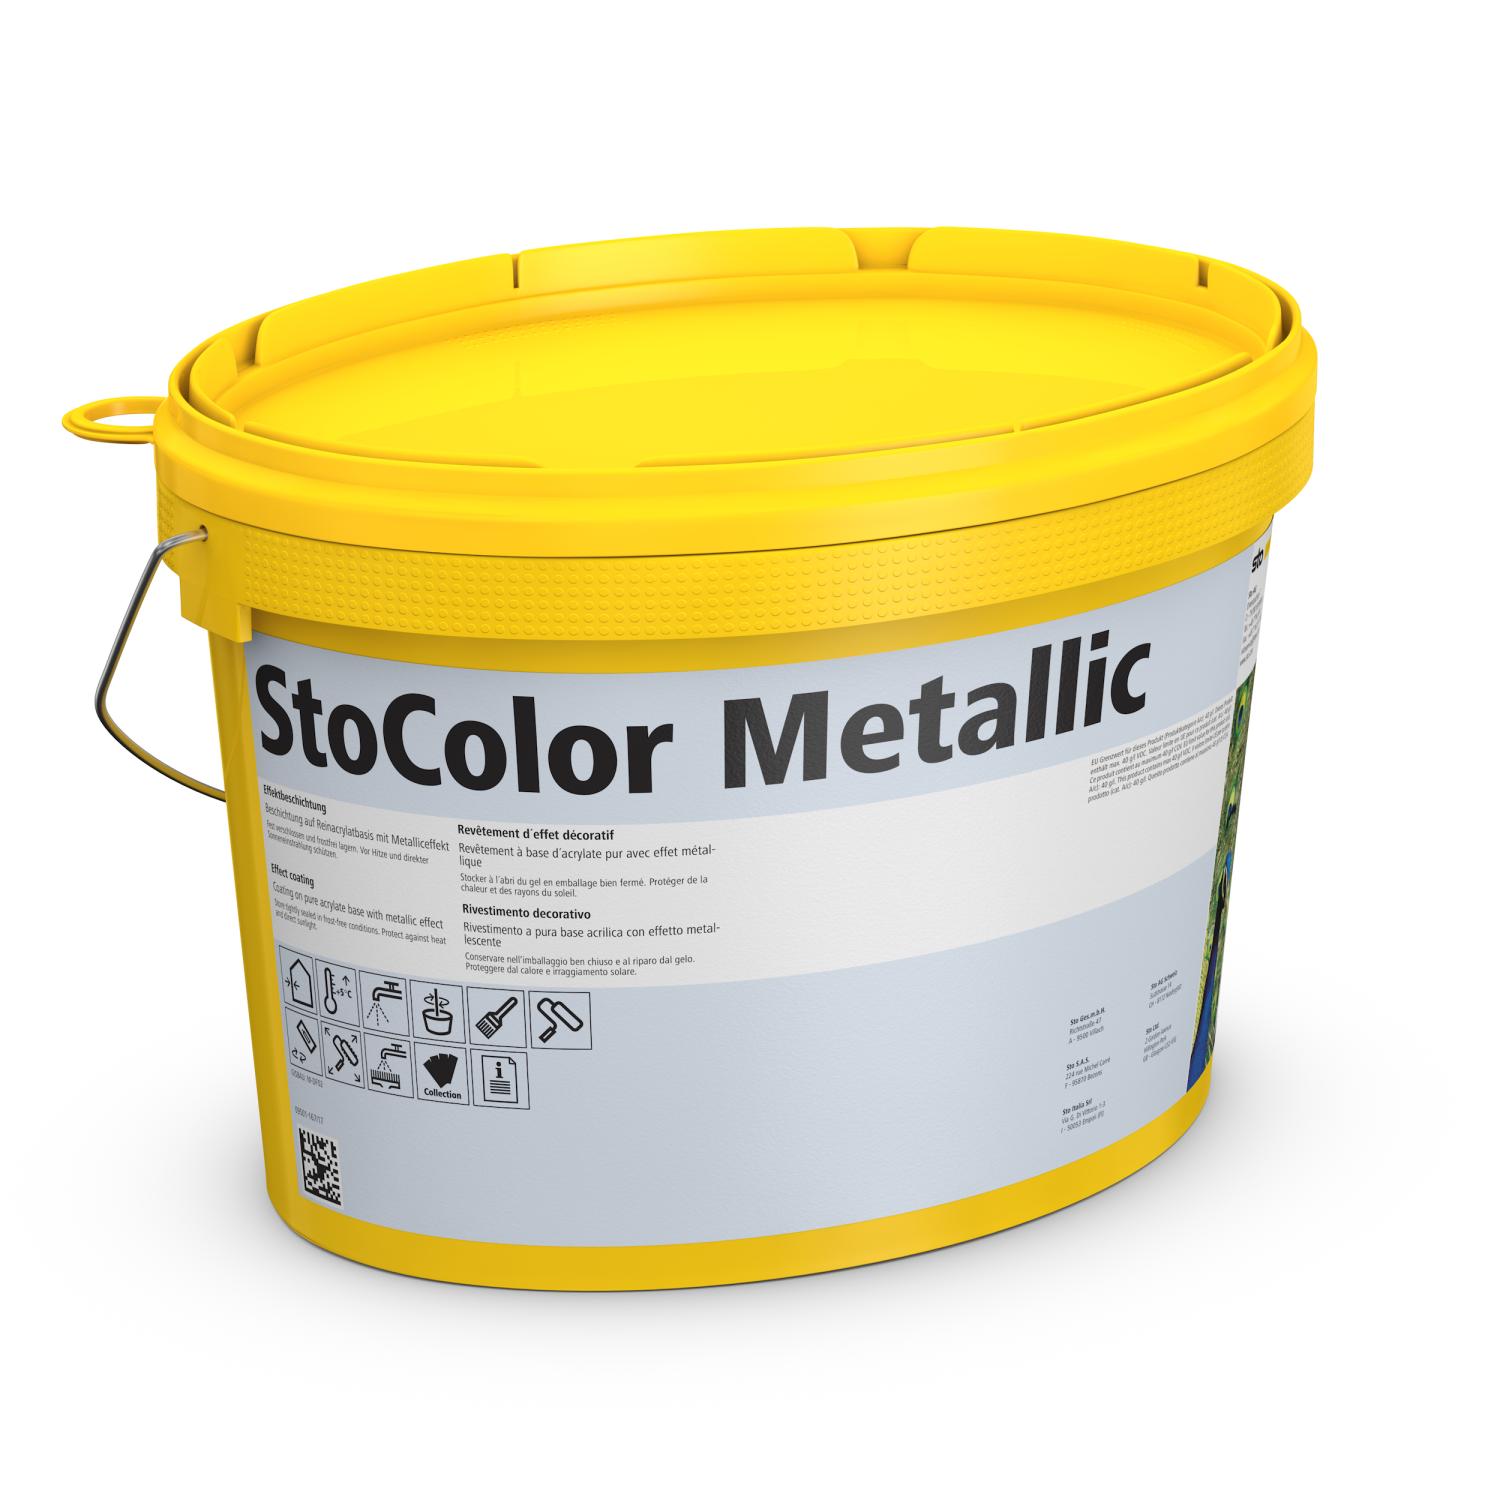 StoColor Metallic getönt - 2,5 l Eimer